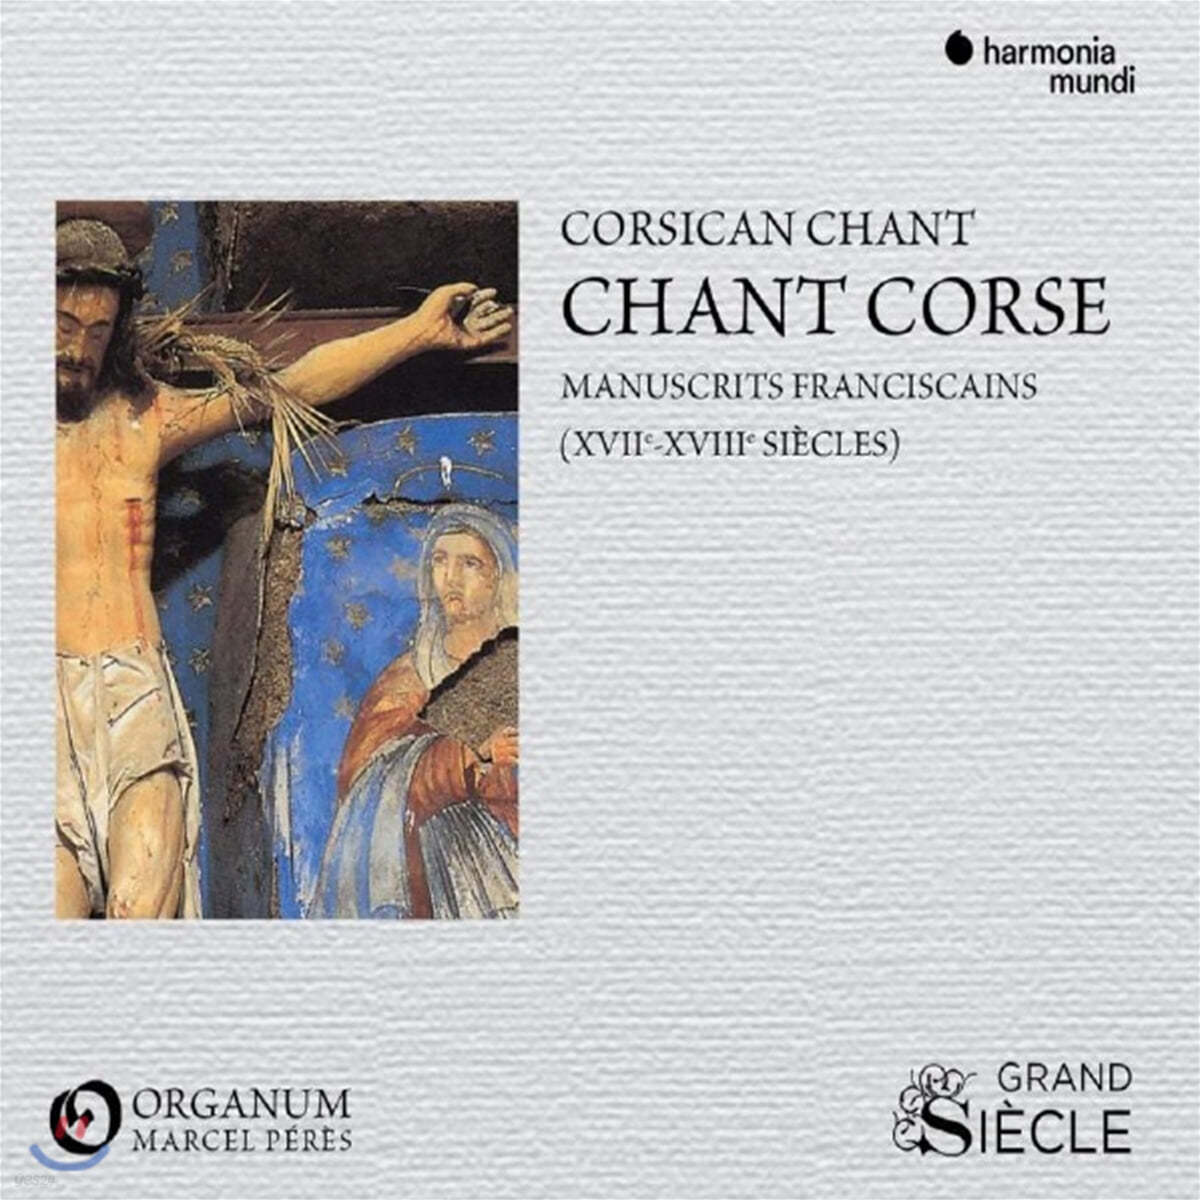 Marcel Peres 코르시카의 성가 - 프란체스코회의 필사본 (Chant Corse: Manuscrits franciscains)